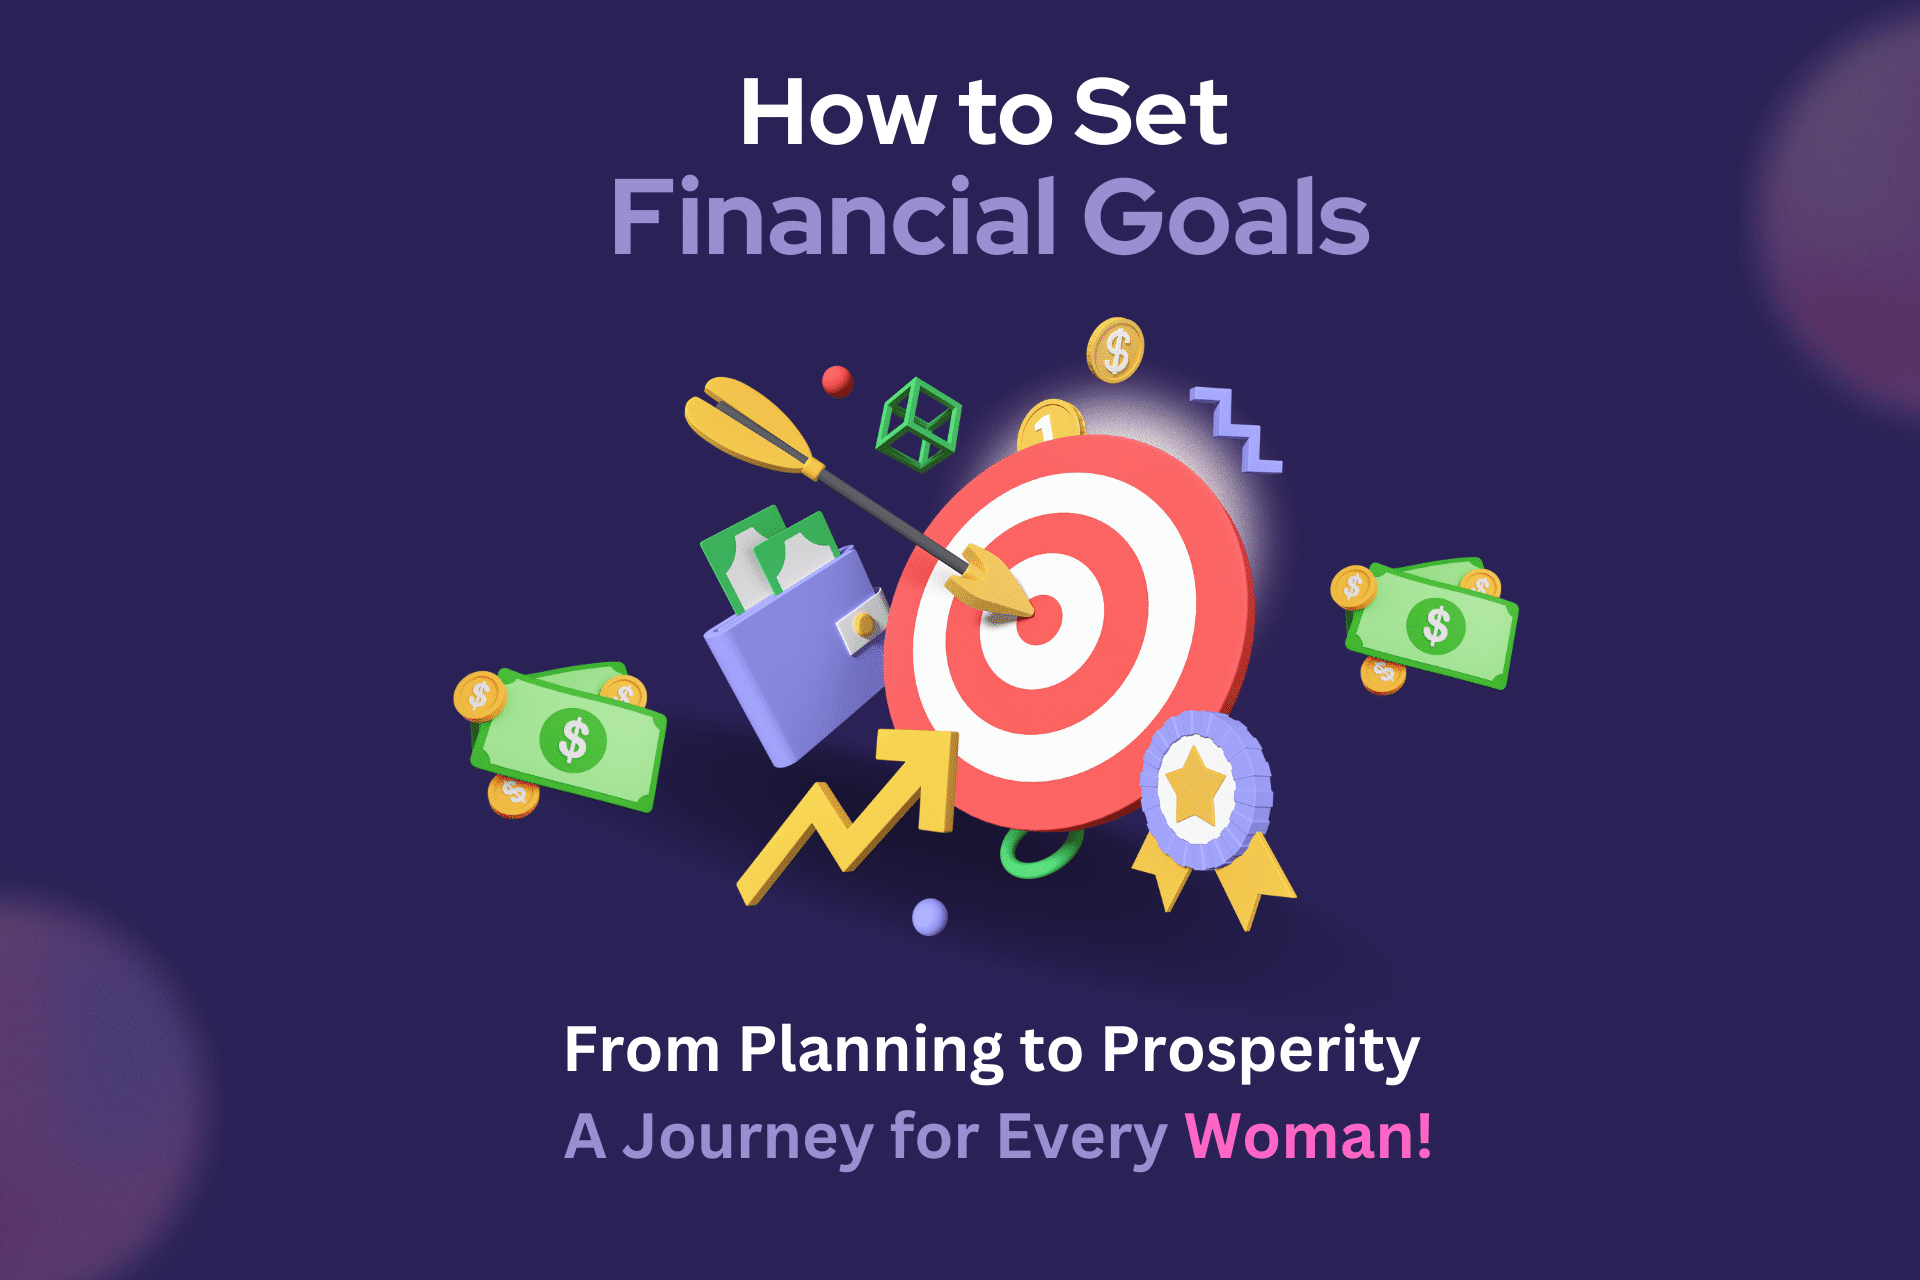 How to set financial goals